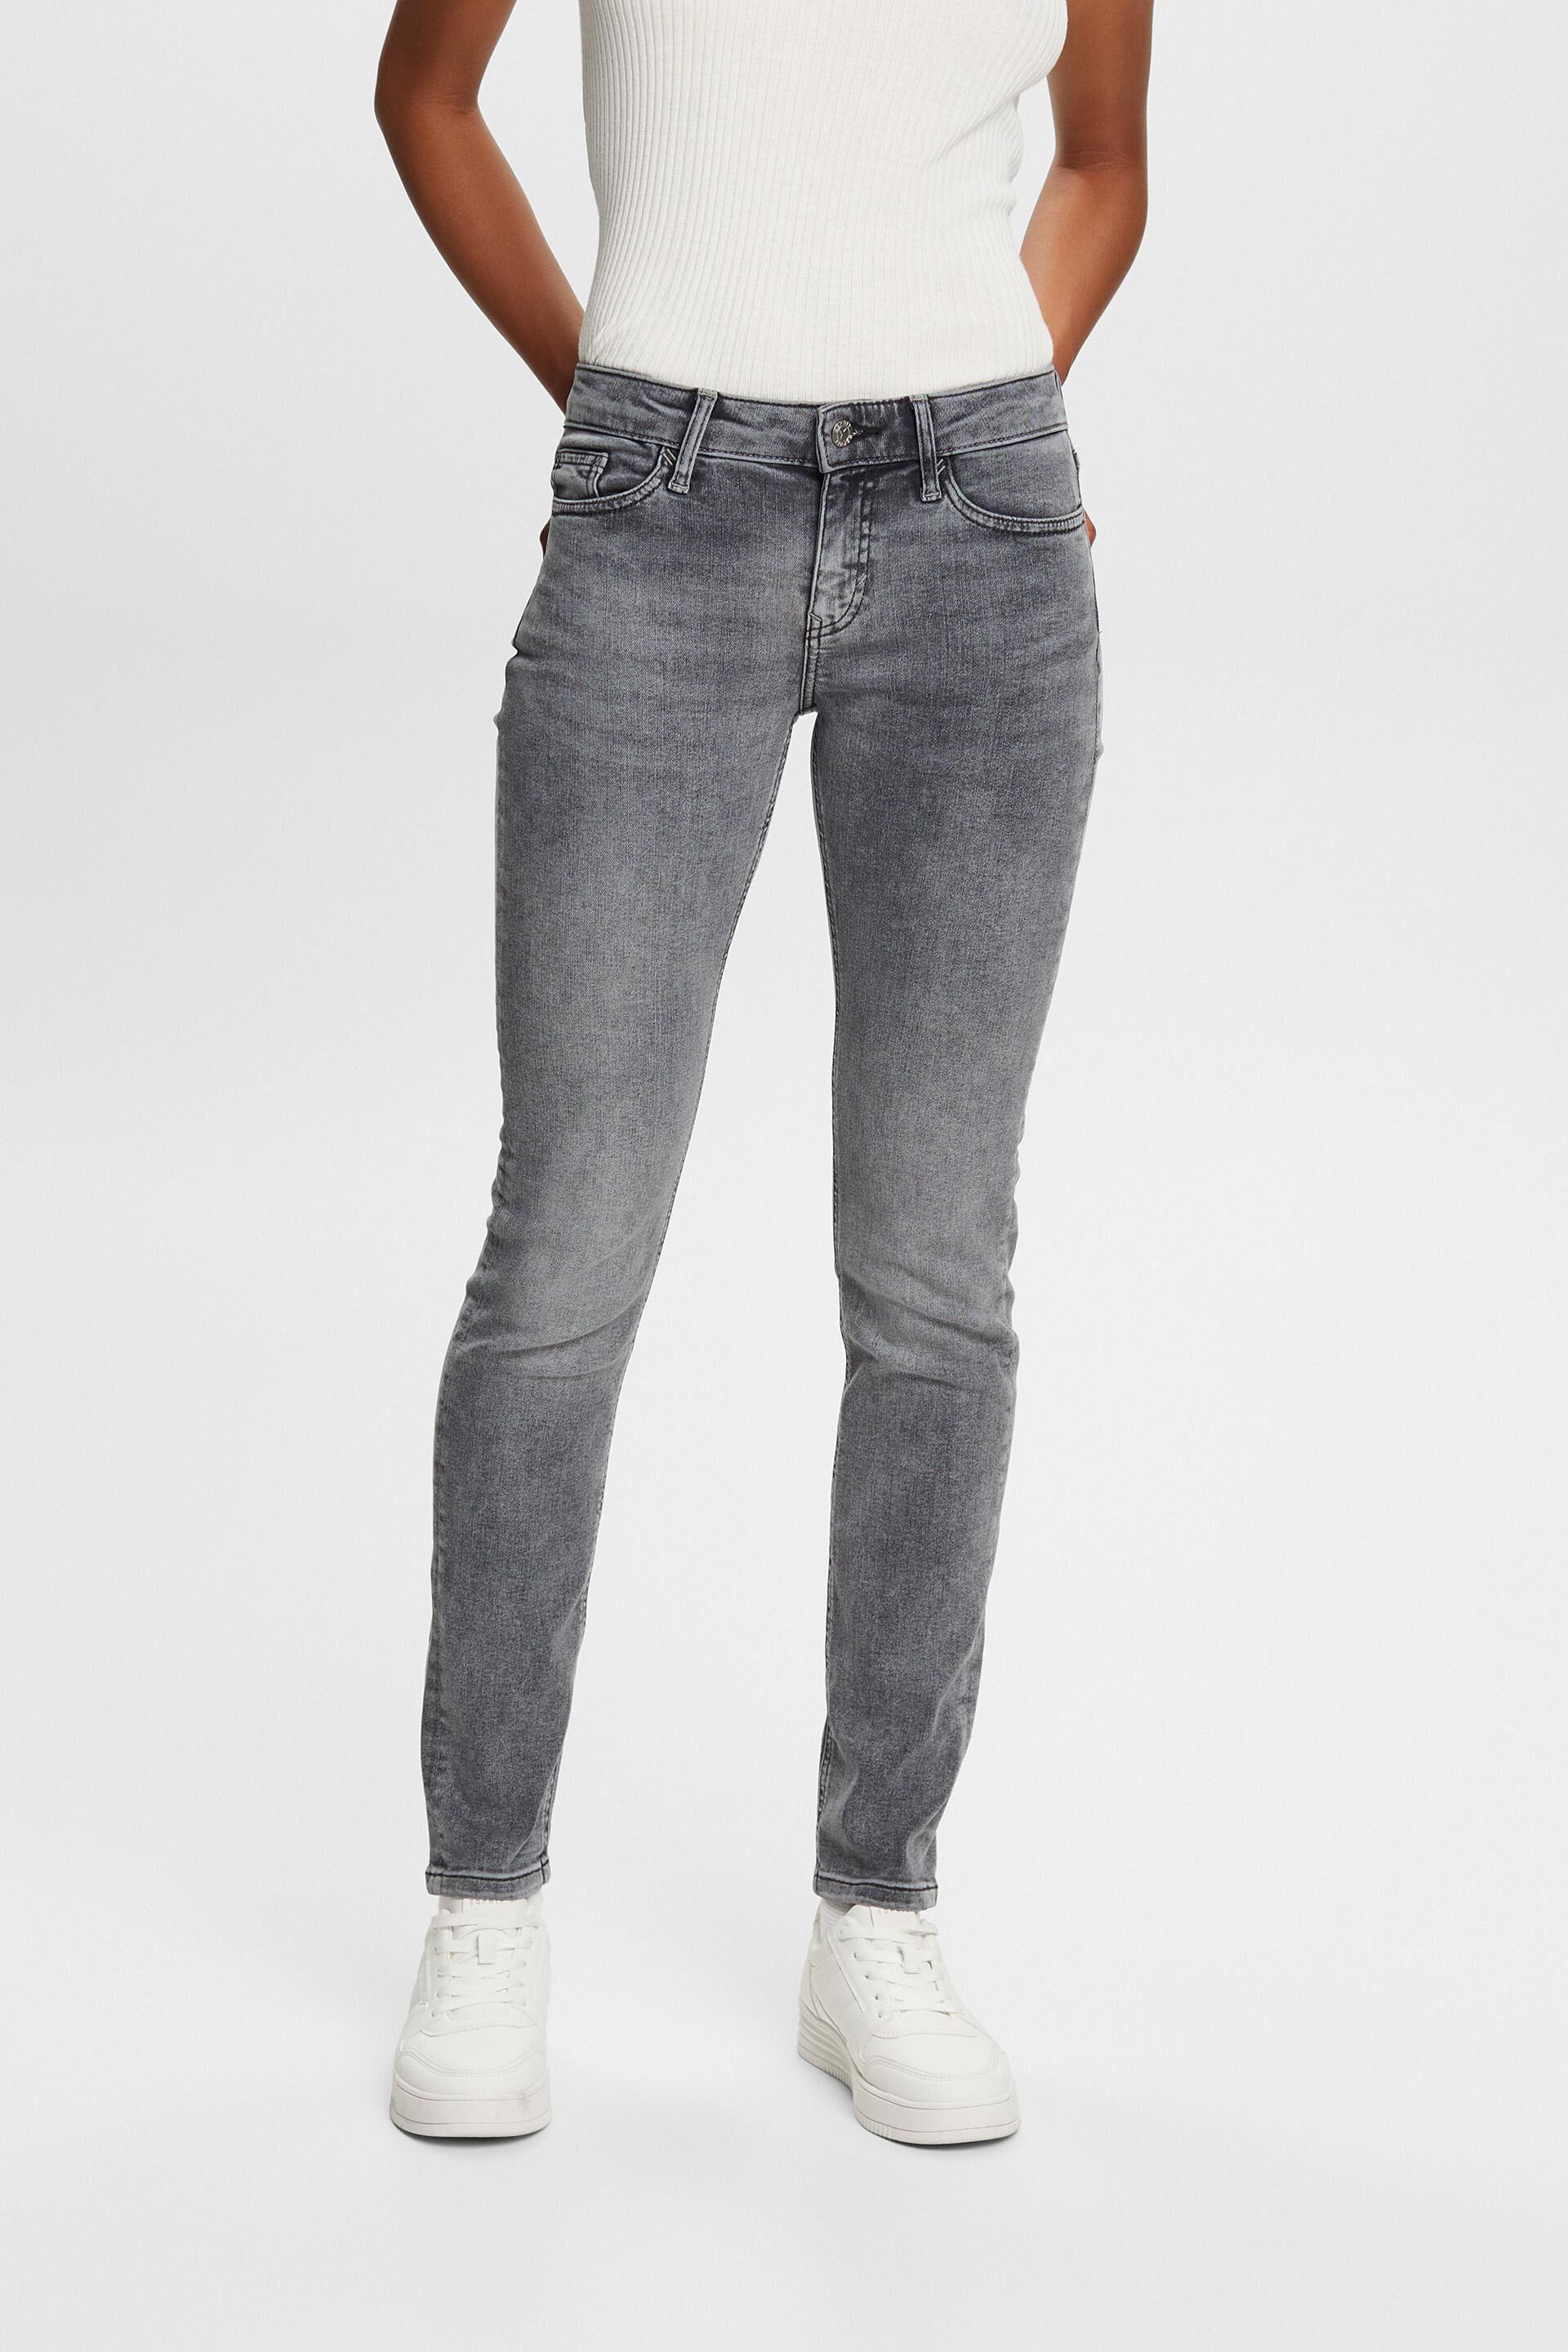 Esprit Damen Slim Mid-Rise Jeans